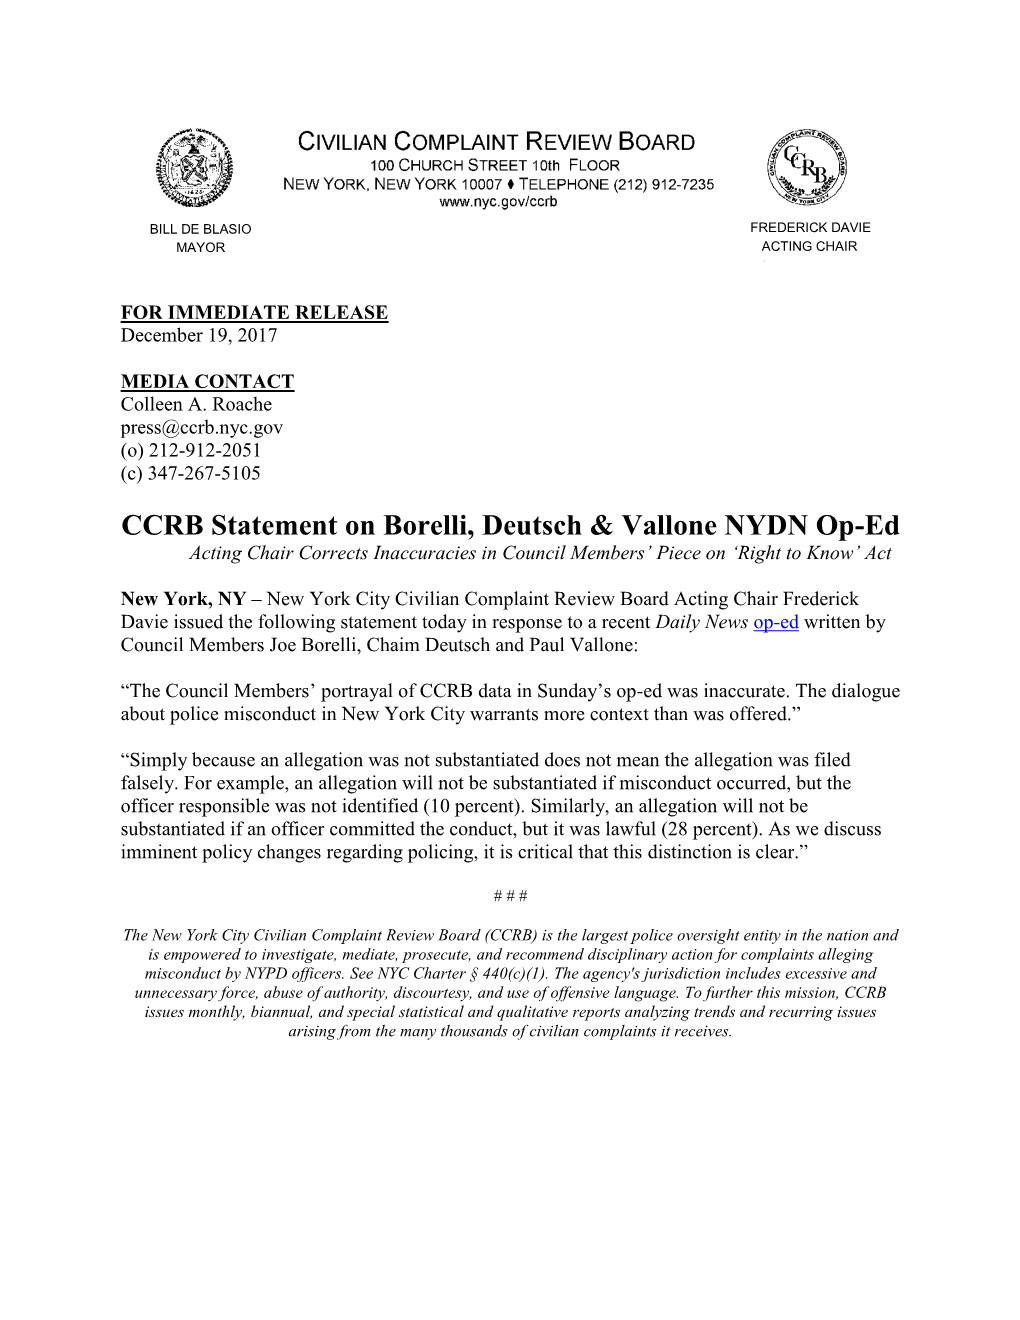 CCRB Statement on Borelli, Deutsch & Vallone NYDN Op-Ed